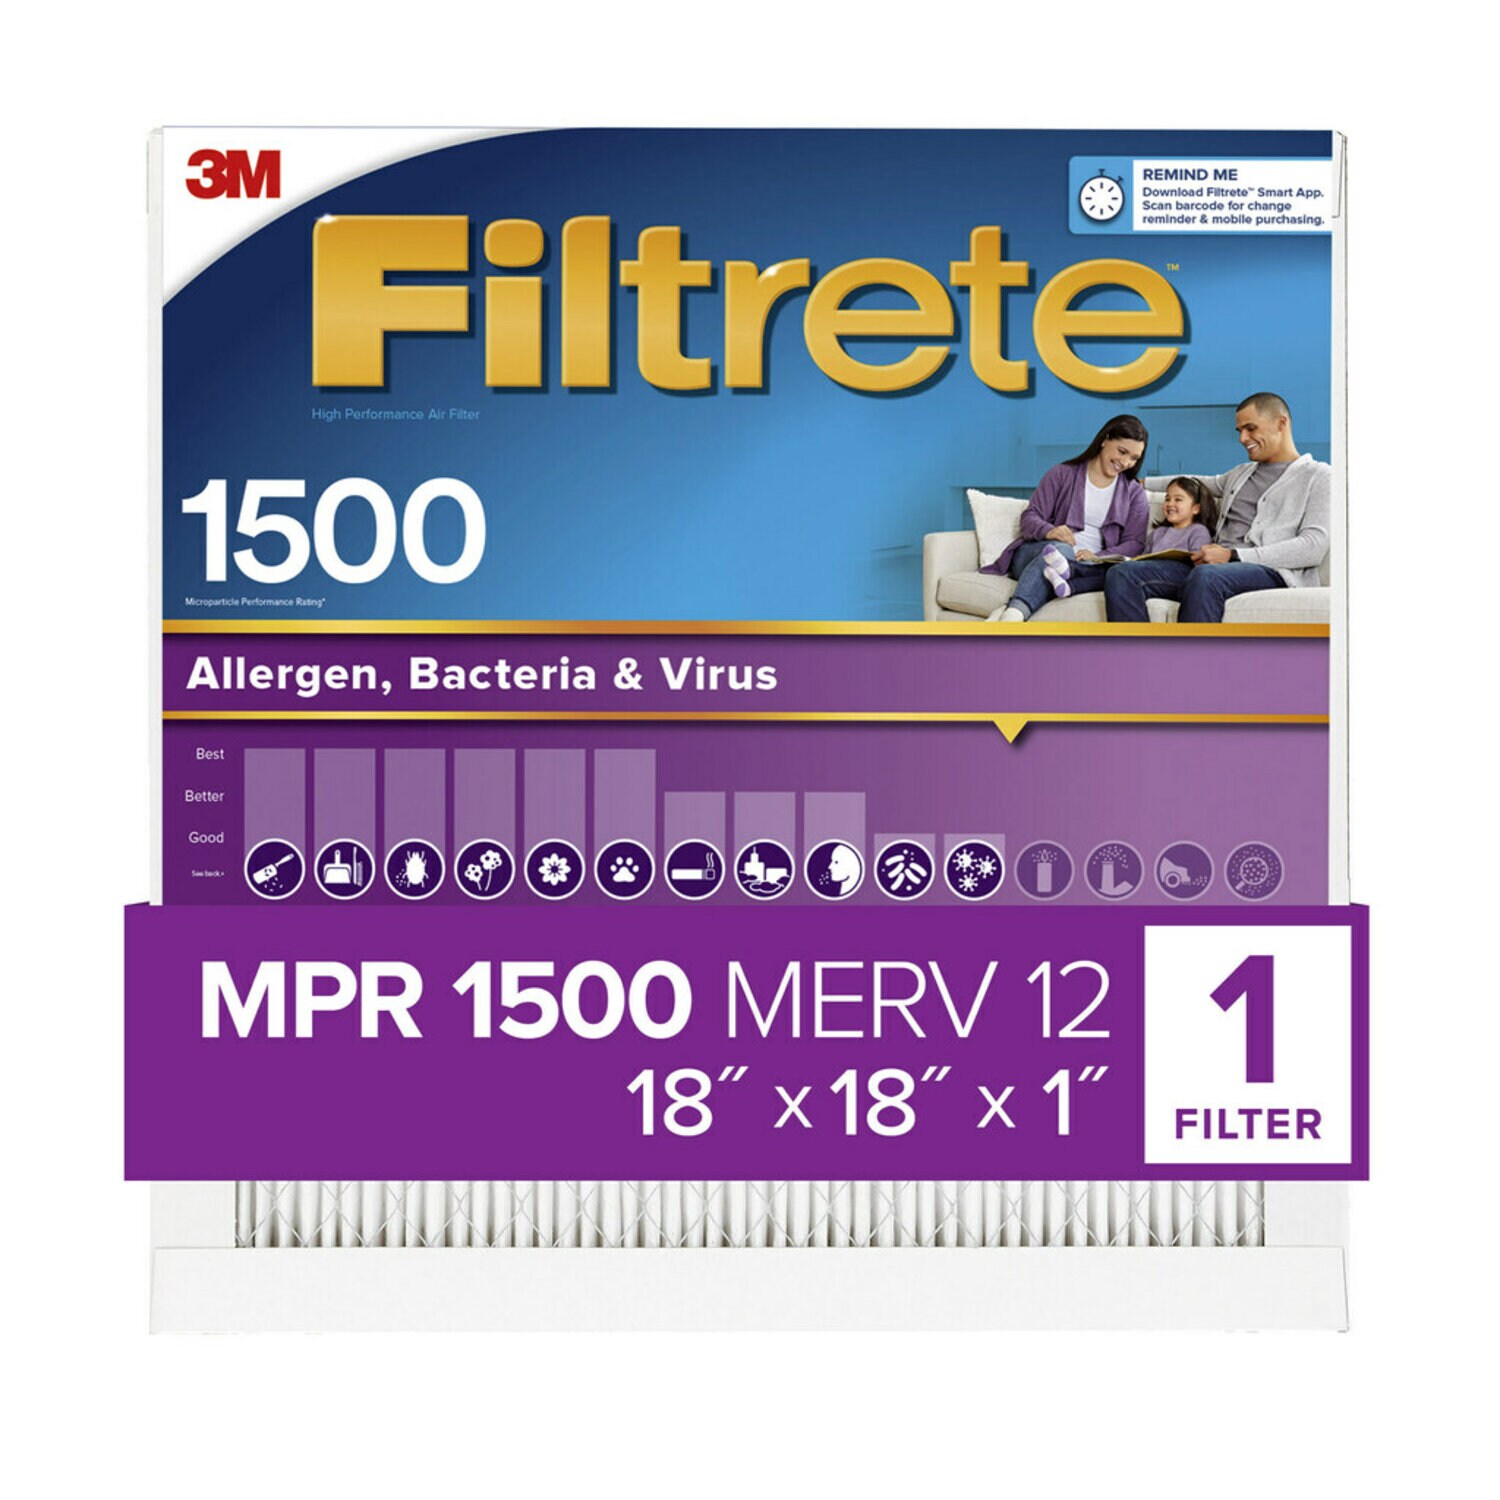 7100188649 - Filtrete Allergen, Bacteria & Virus Air Filter, 1500 MPR, 2017-4, 18 in
x 18 in x 1 in (45,7 cm x 45,7 cm x 2,5 cm)